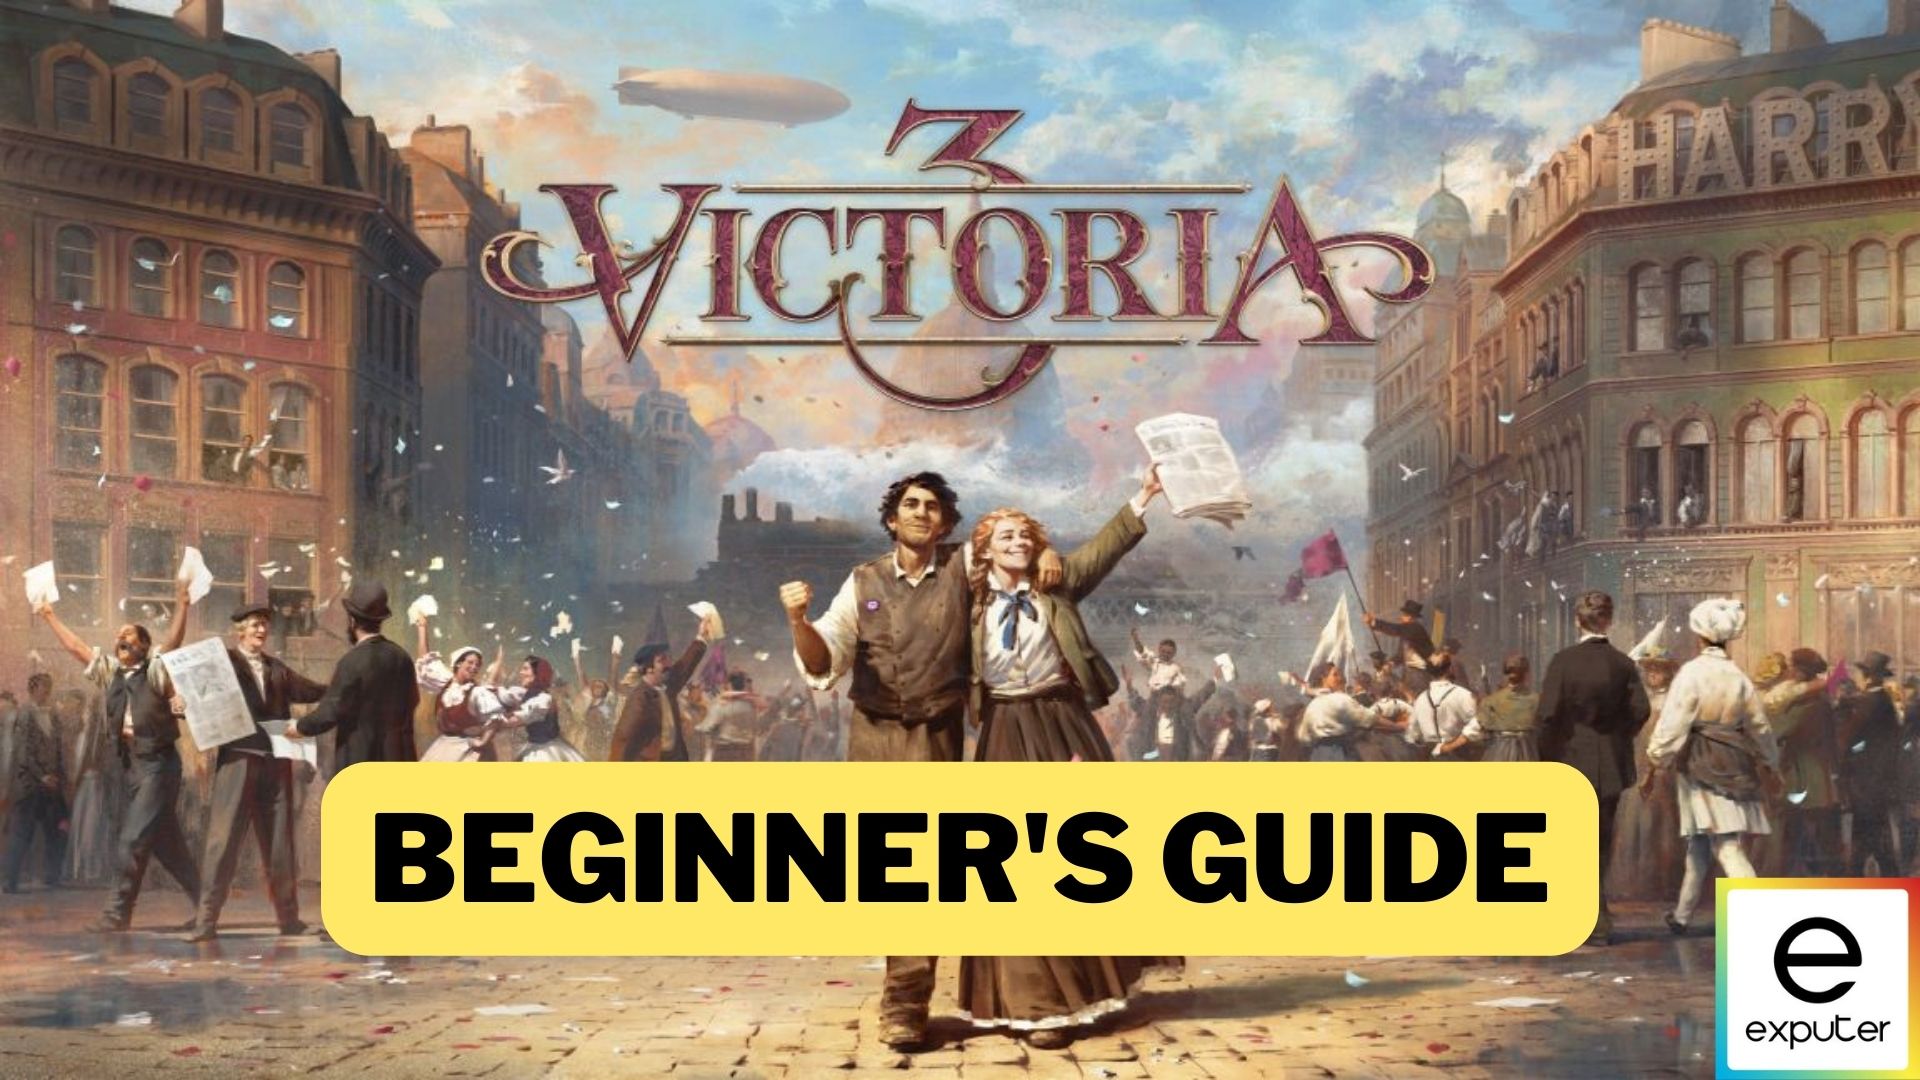 Victoria 3 Beginner's Guide